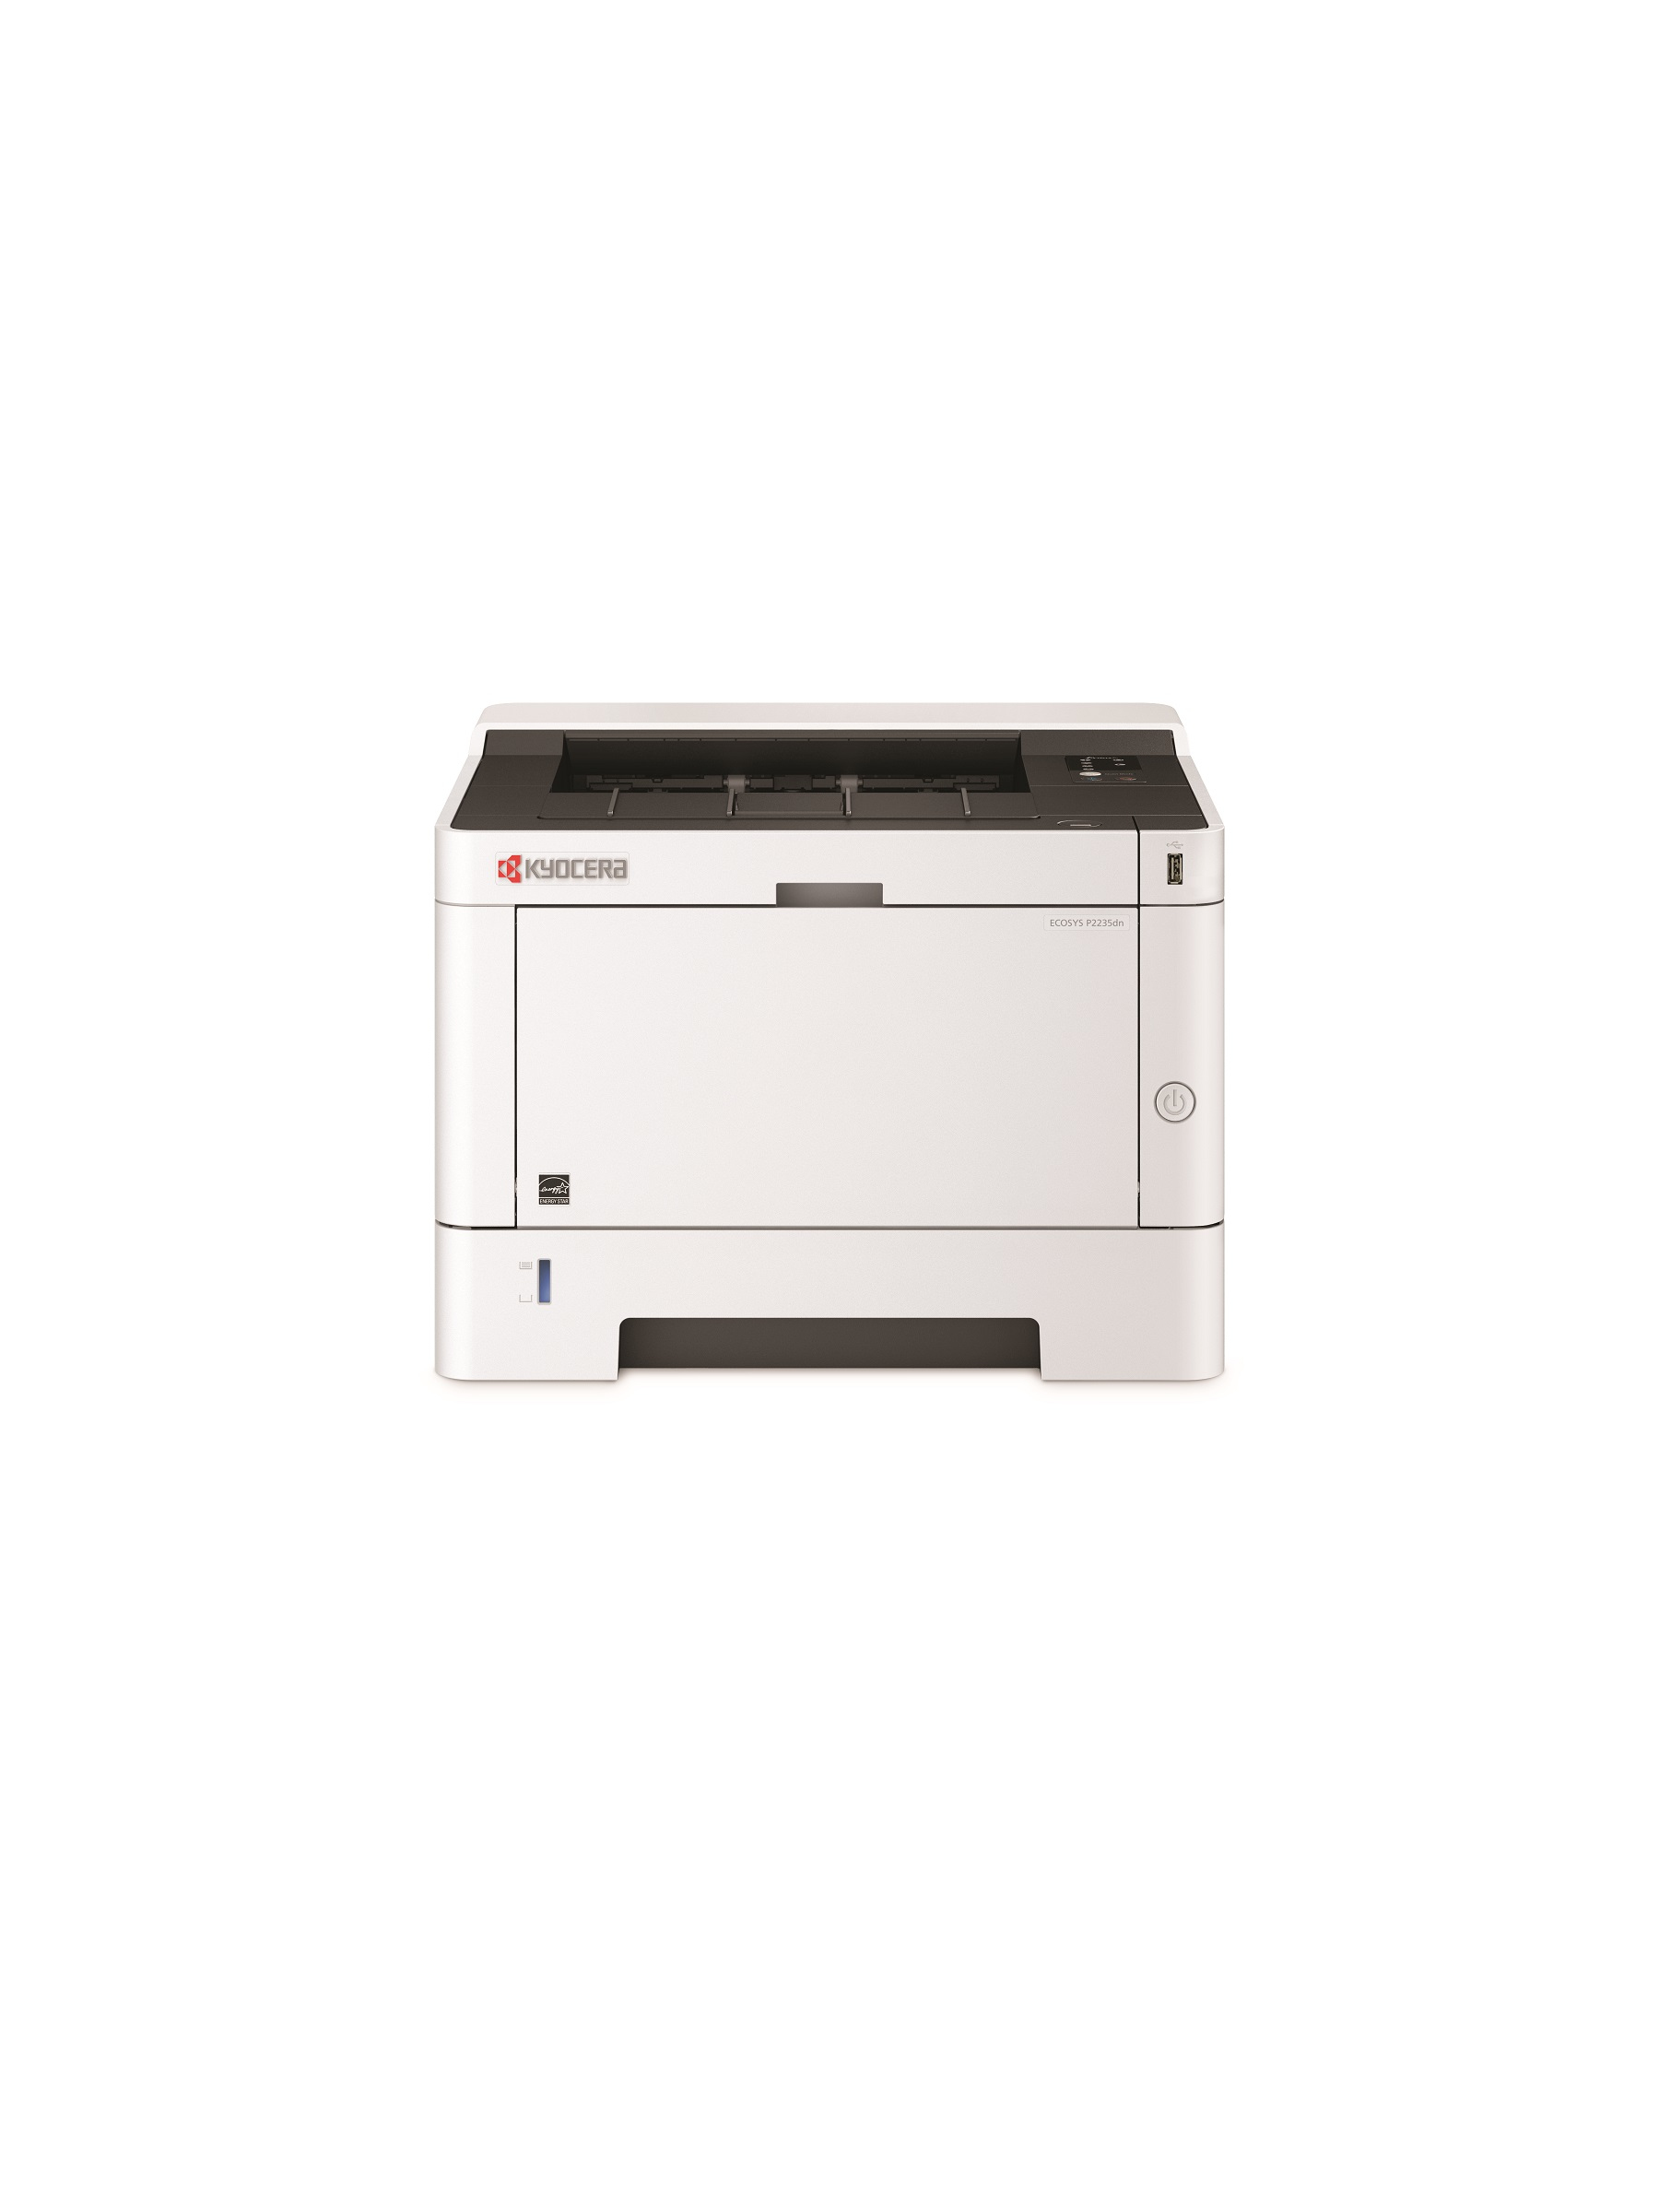 KYOCERA 870B61102RW3NL2 laser printer